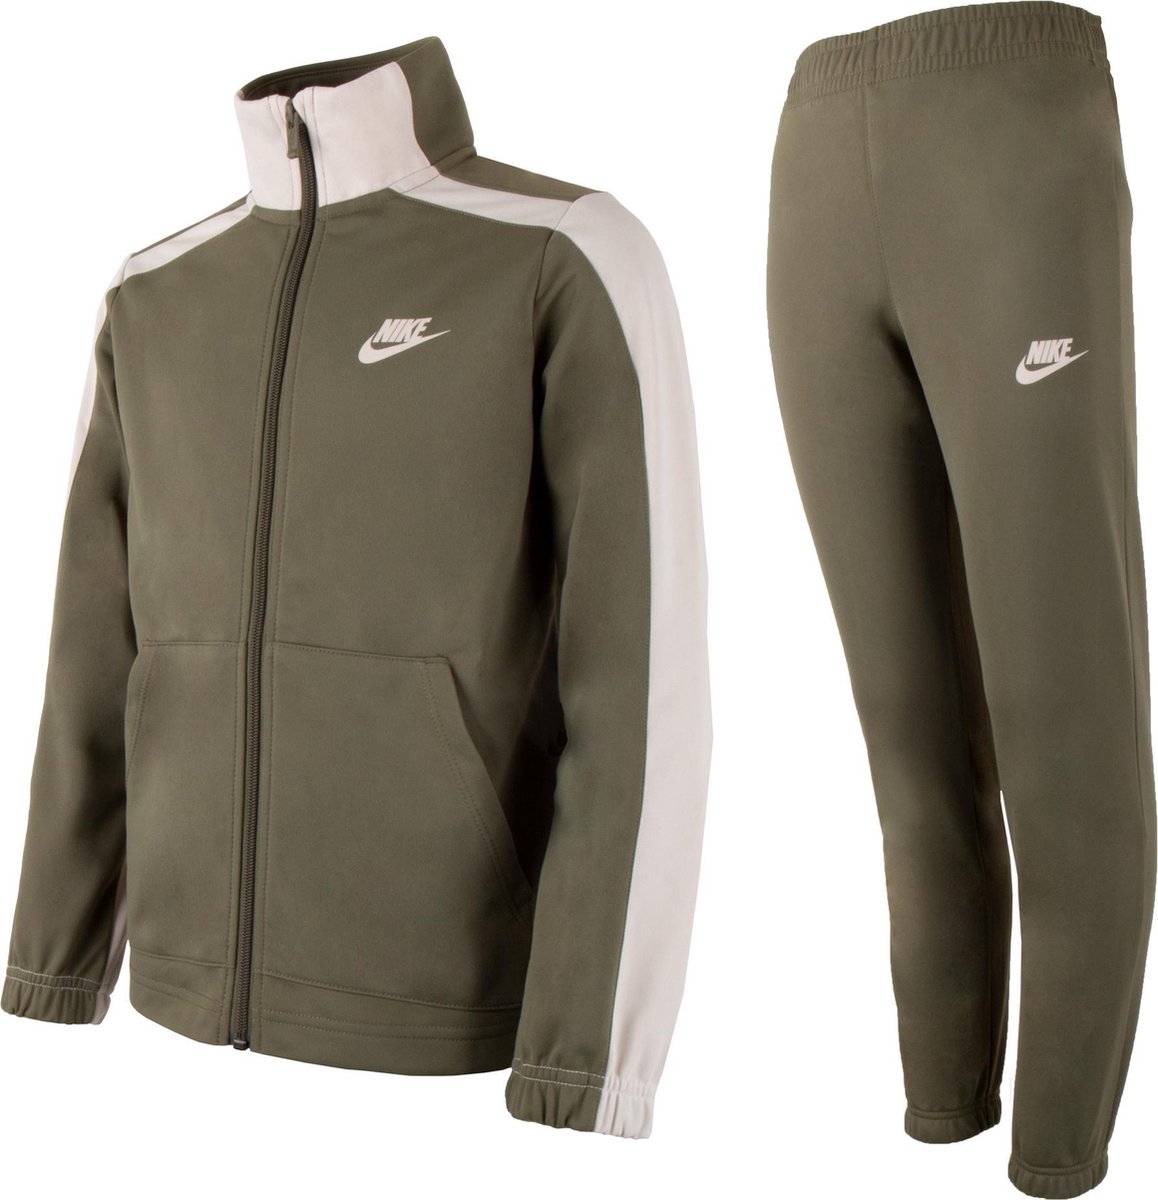 Perforatie bevestigen ga verder Nike Nike Sportswear Trainingspak - Maat 146 - Unisex - olijfgroen - beige  | bol.com